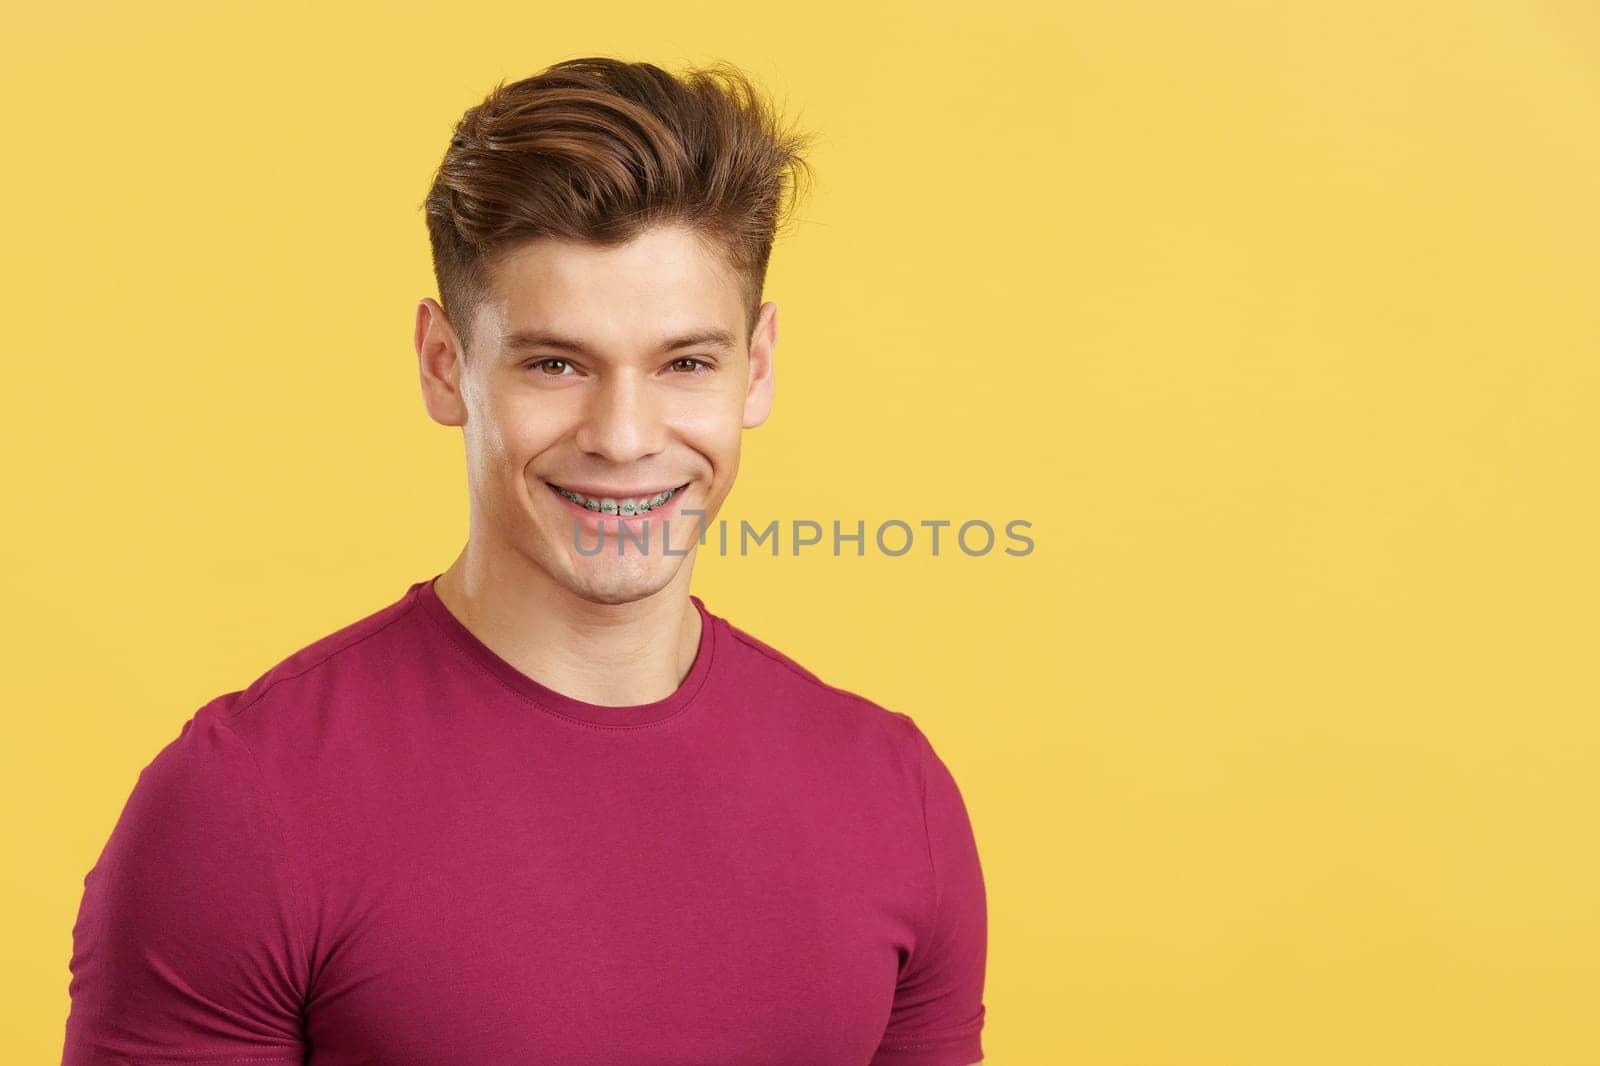 Caucasian man smiling while wearing brackets on his teeth by ivanmoreno